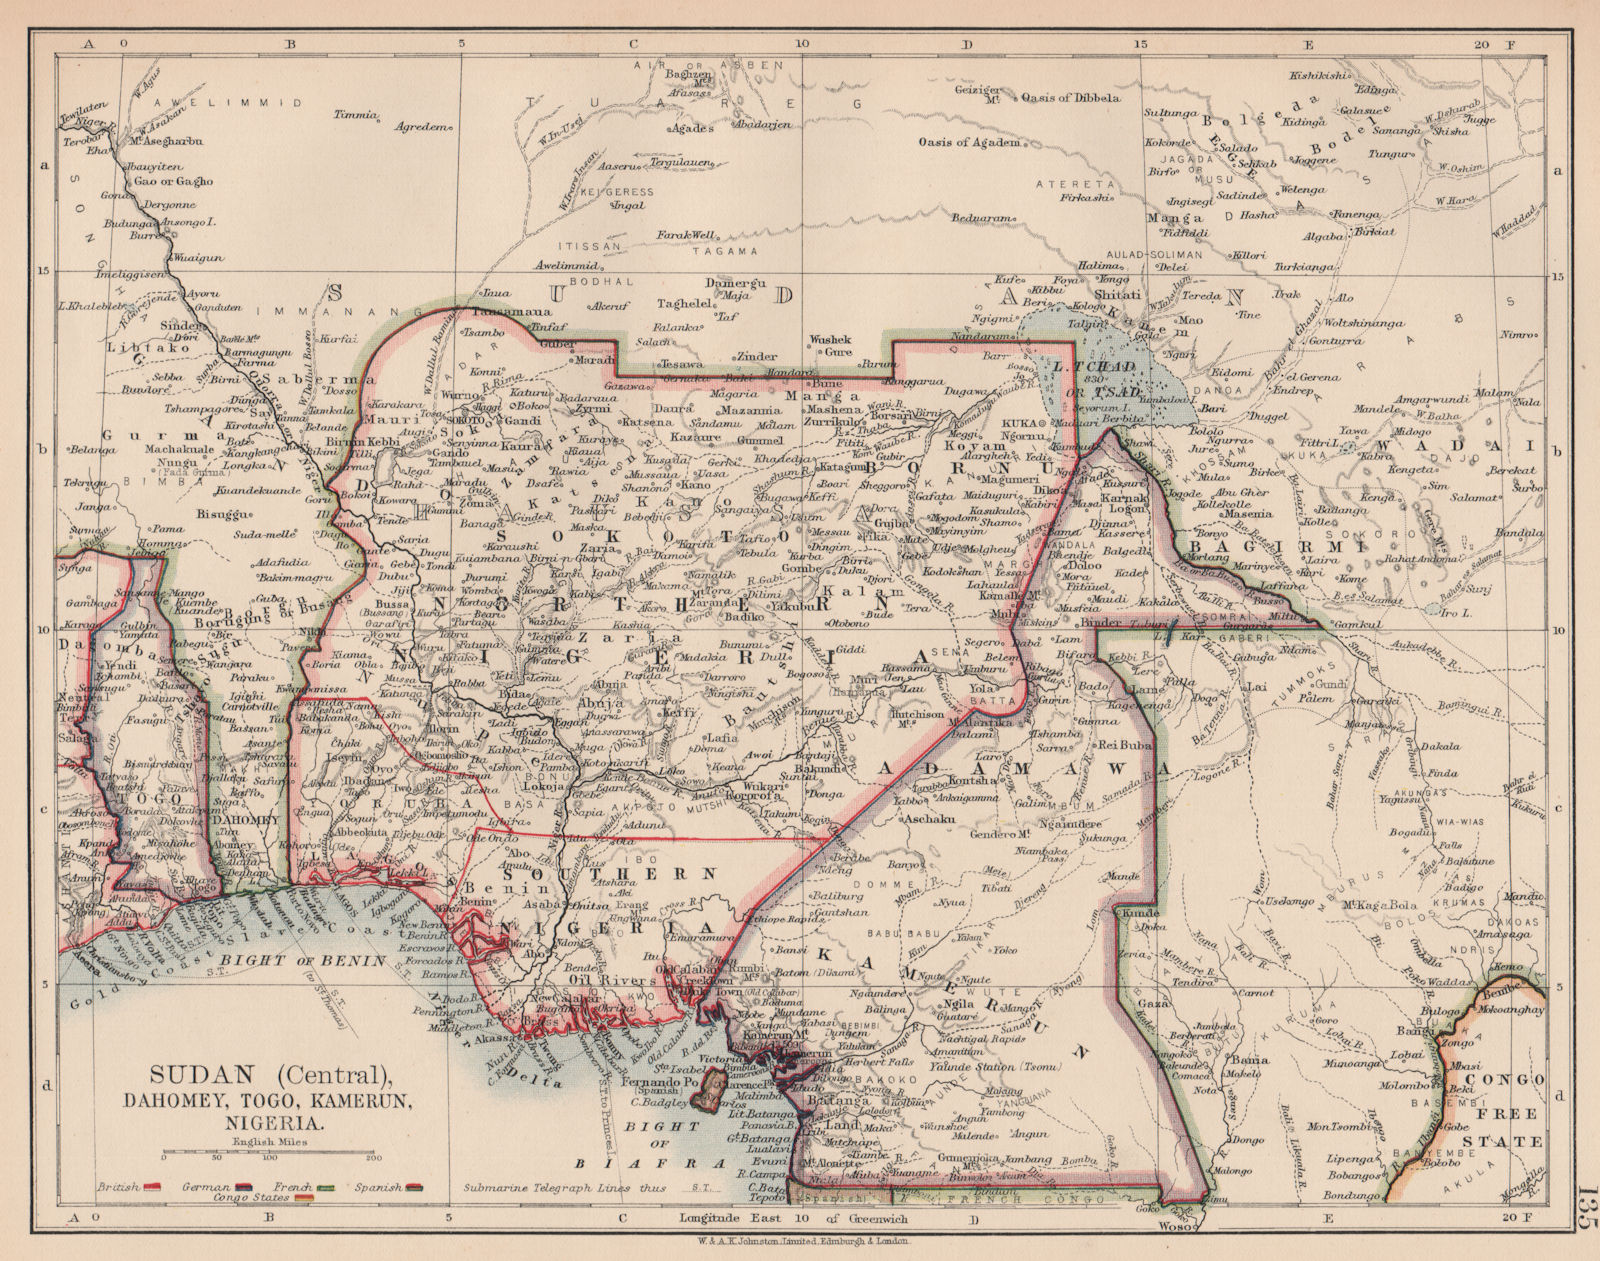 COLONIAL NIGERIA & CAMEROON. "Sudan" Dahomey (Benin) Togo, Kamerun 1906 map